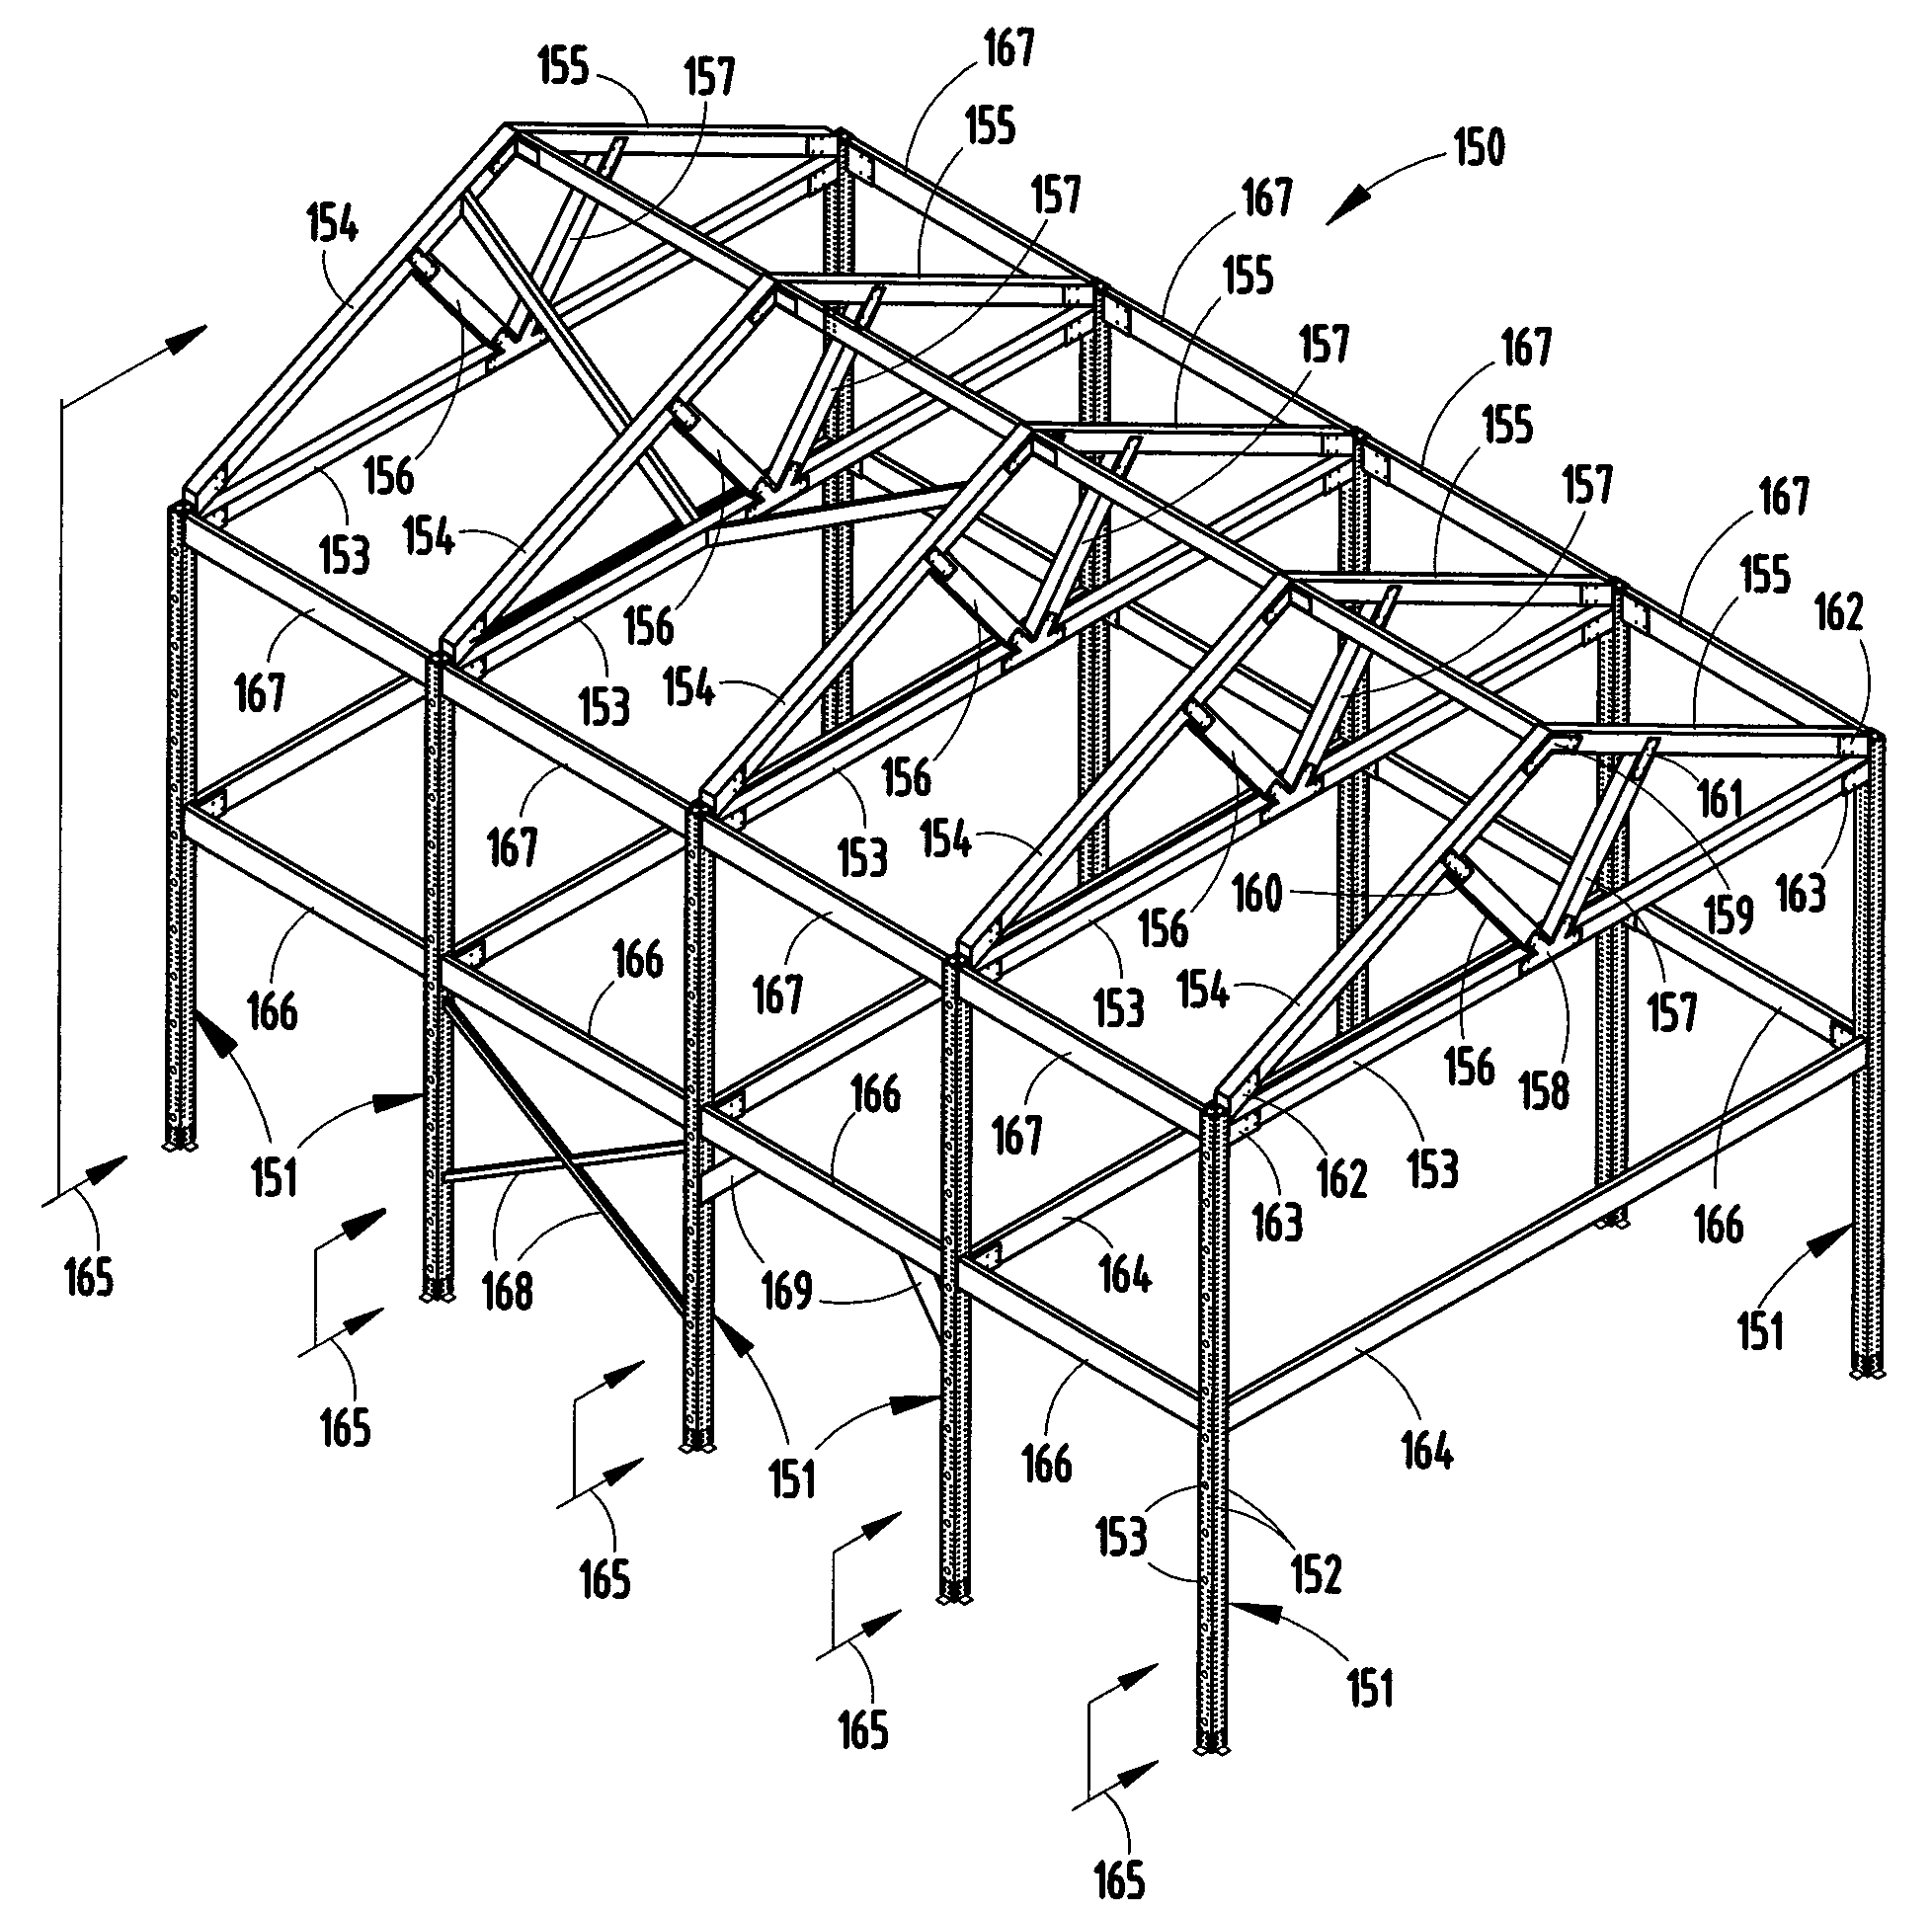 Flexible modular building framework